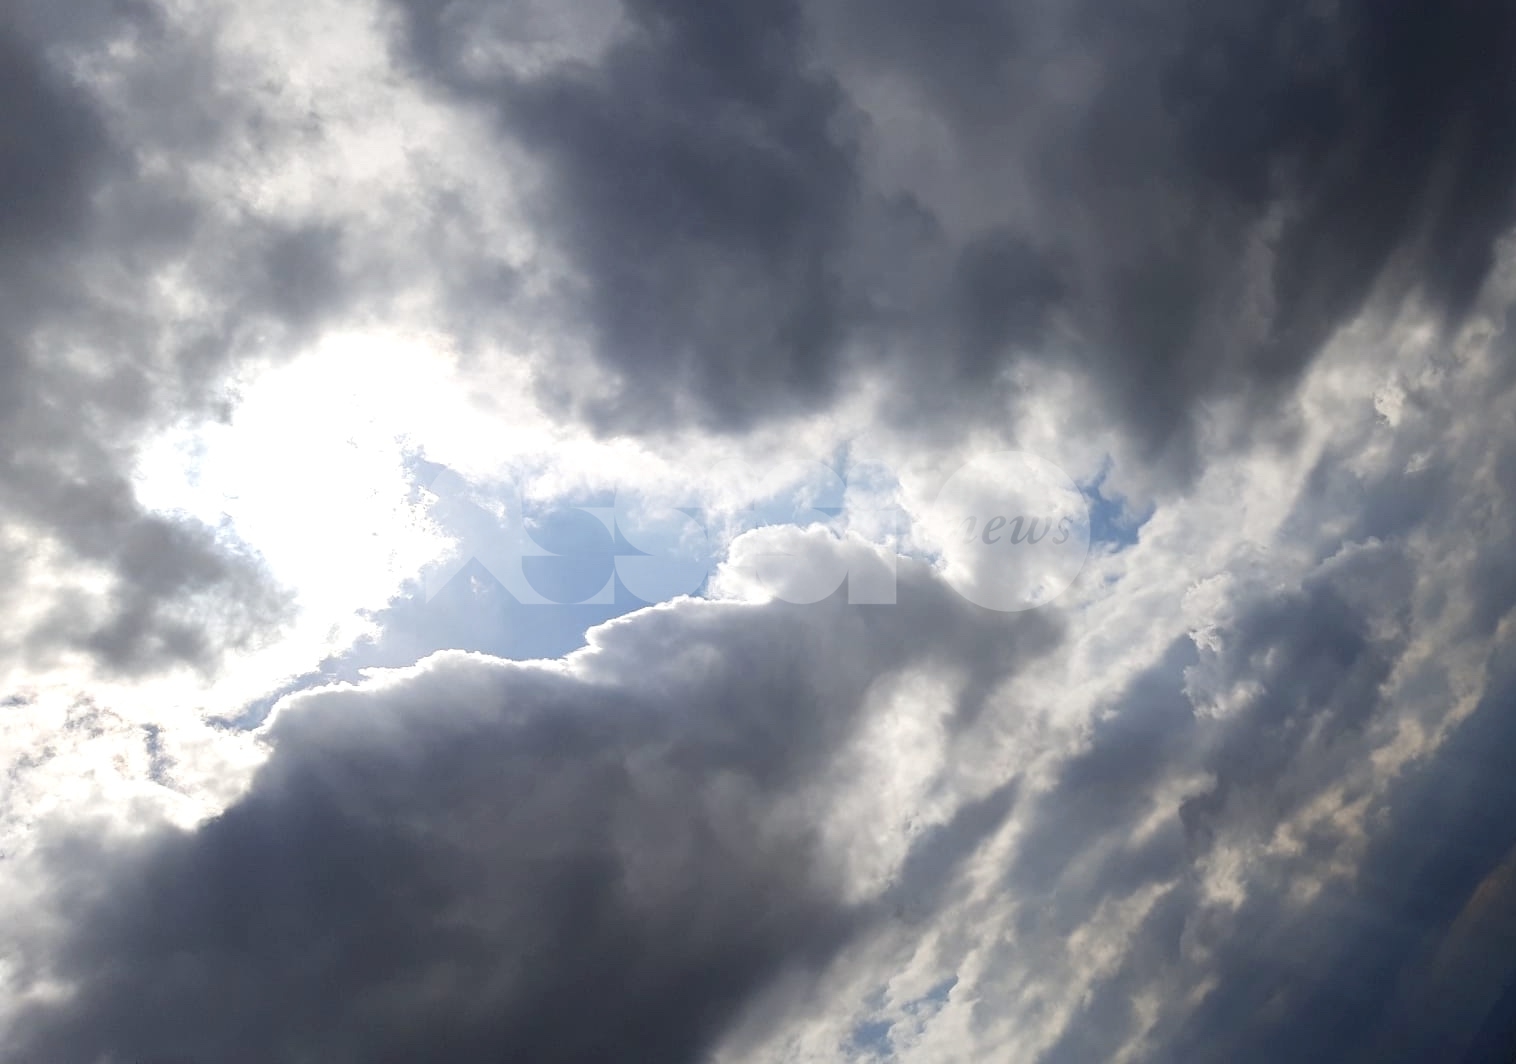 Meteo Assisi 16-18 aprile 2021: tra sole e nuvole, giornate anomale e fredde